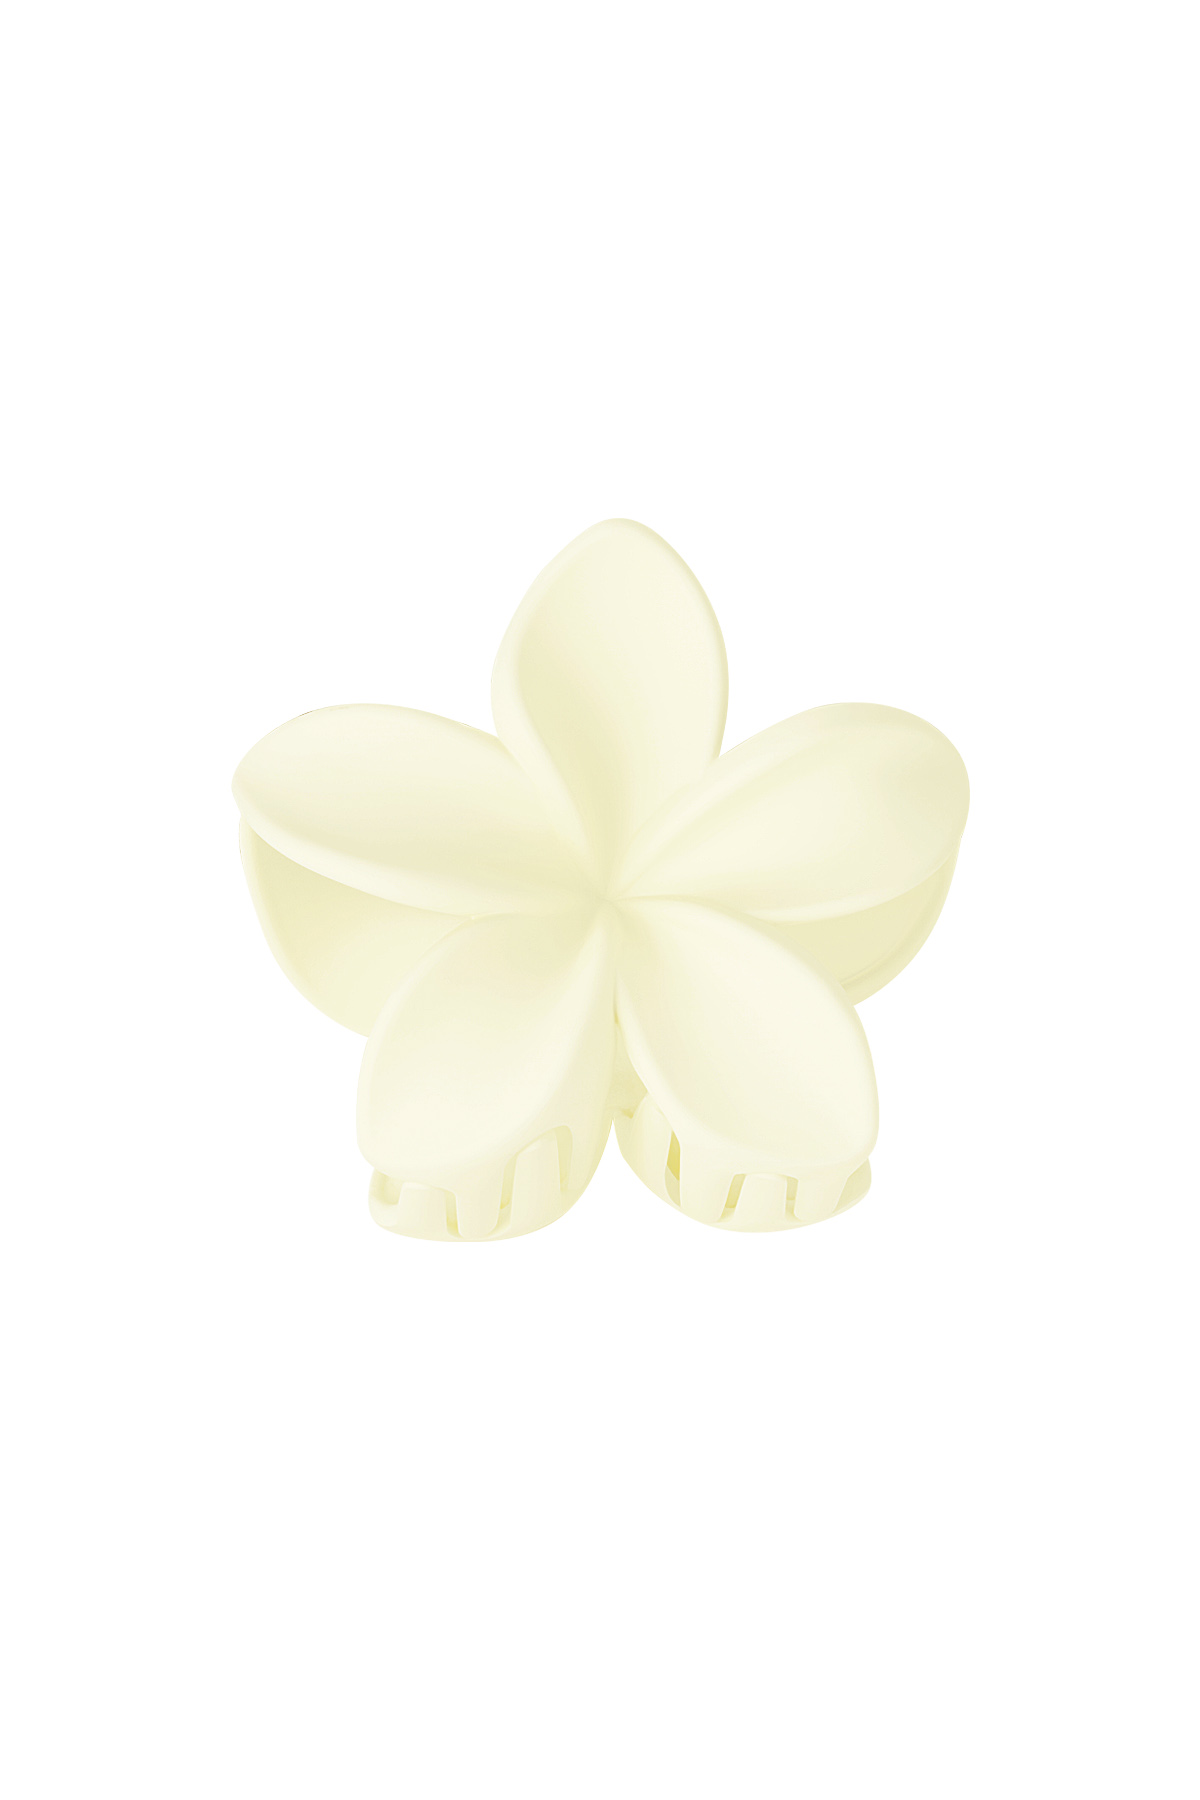 Haarspange Blume - creme Kunststoff 